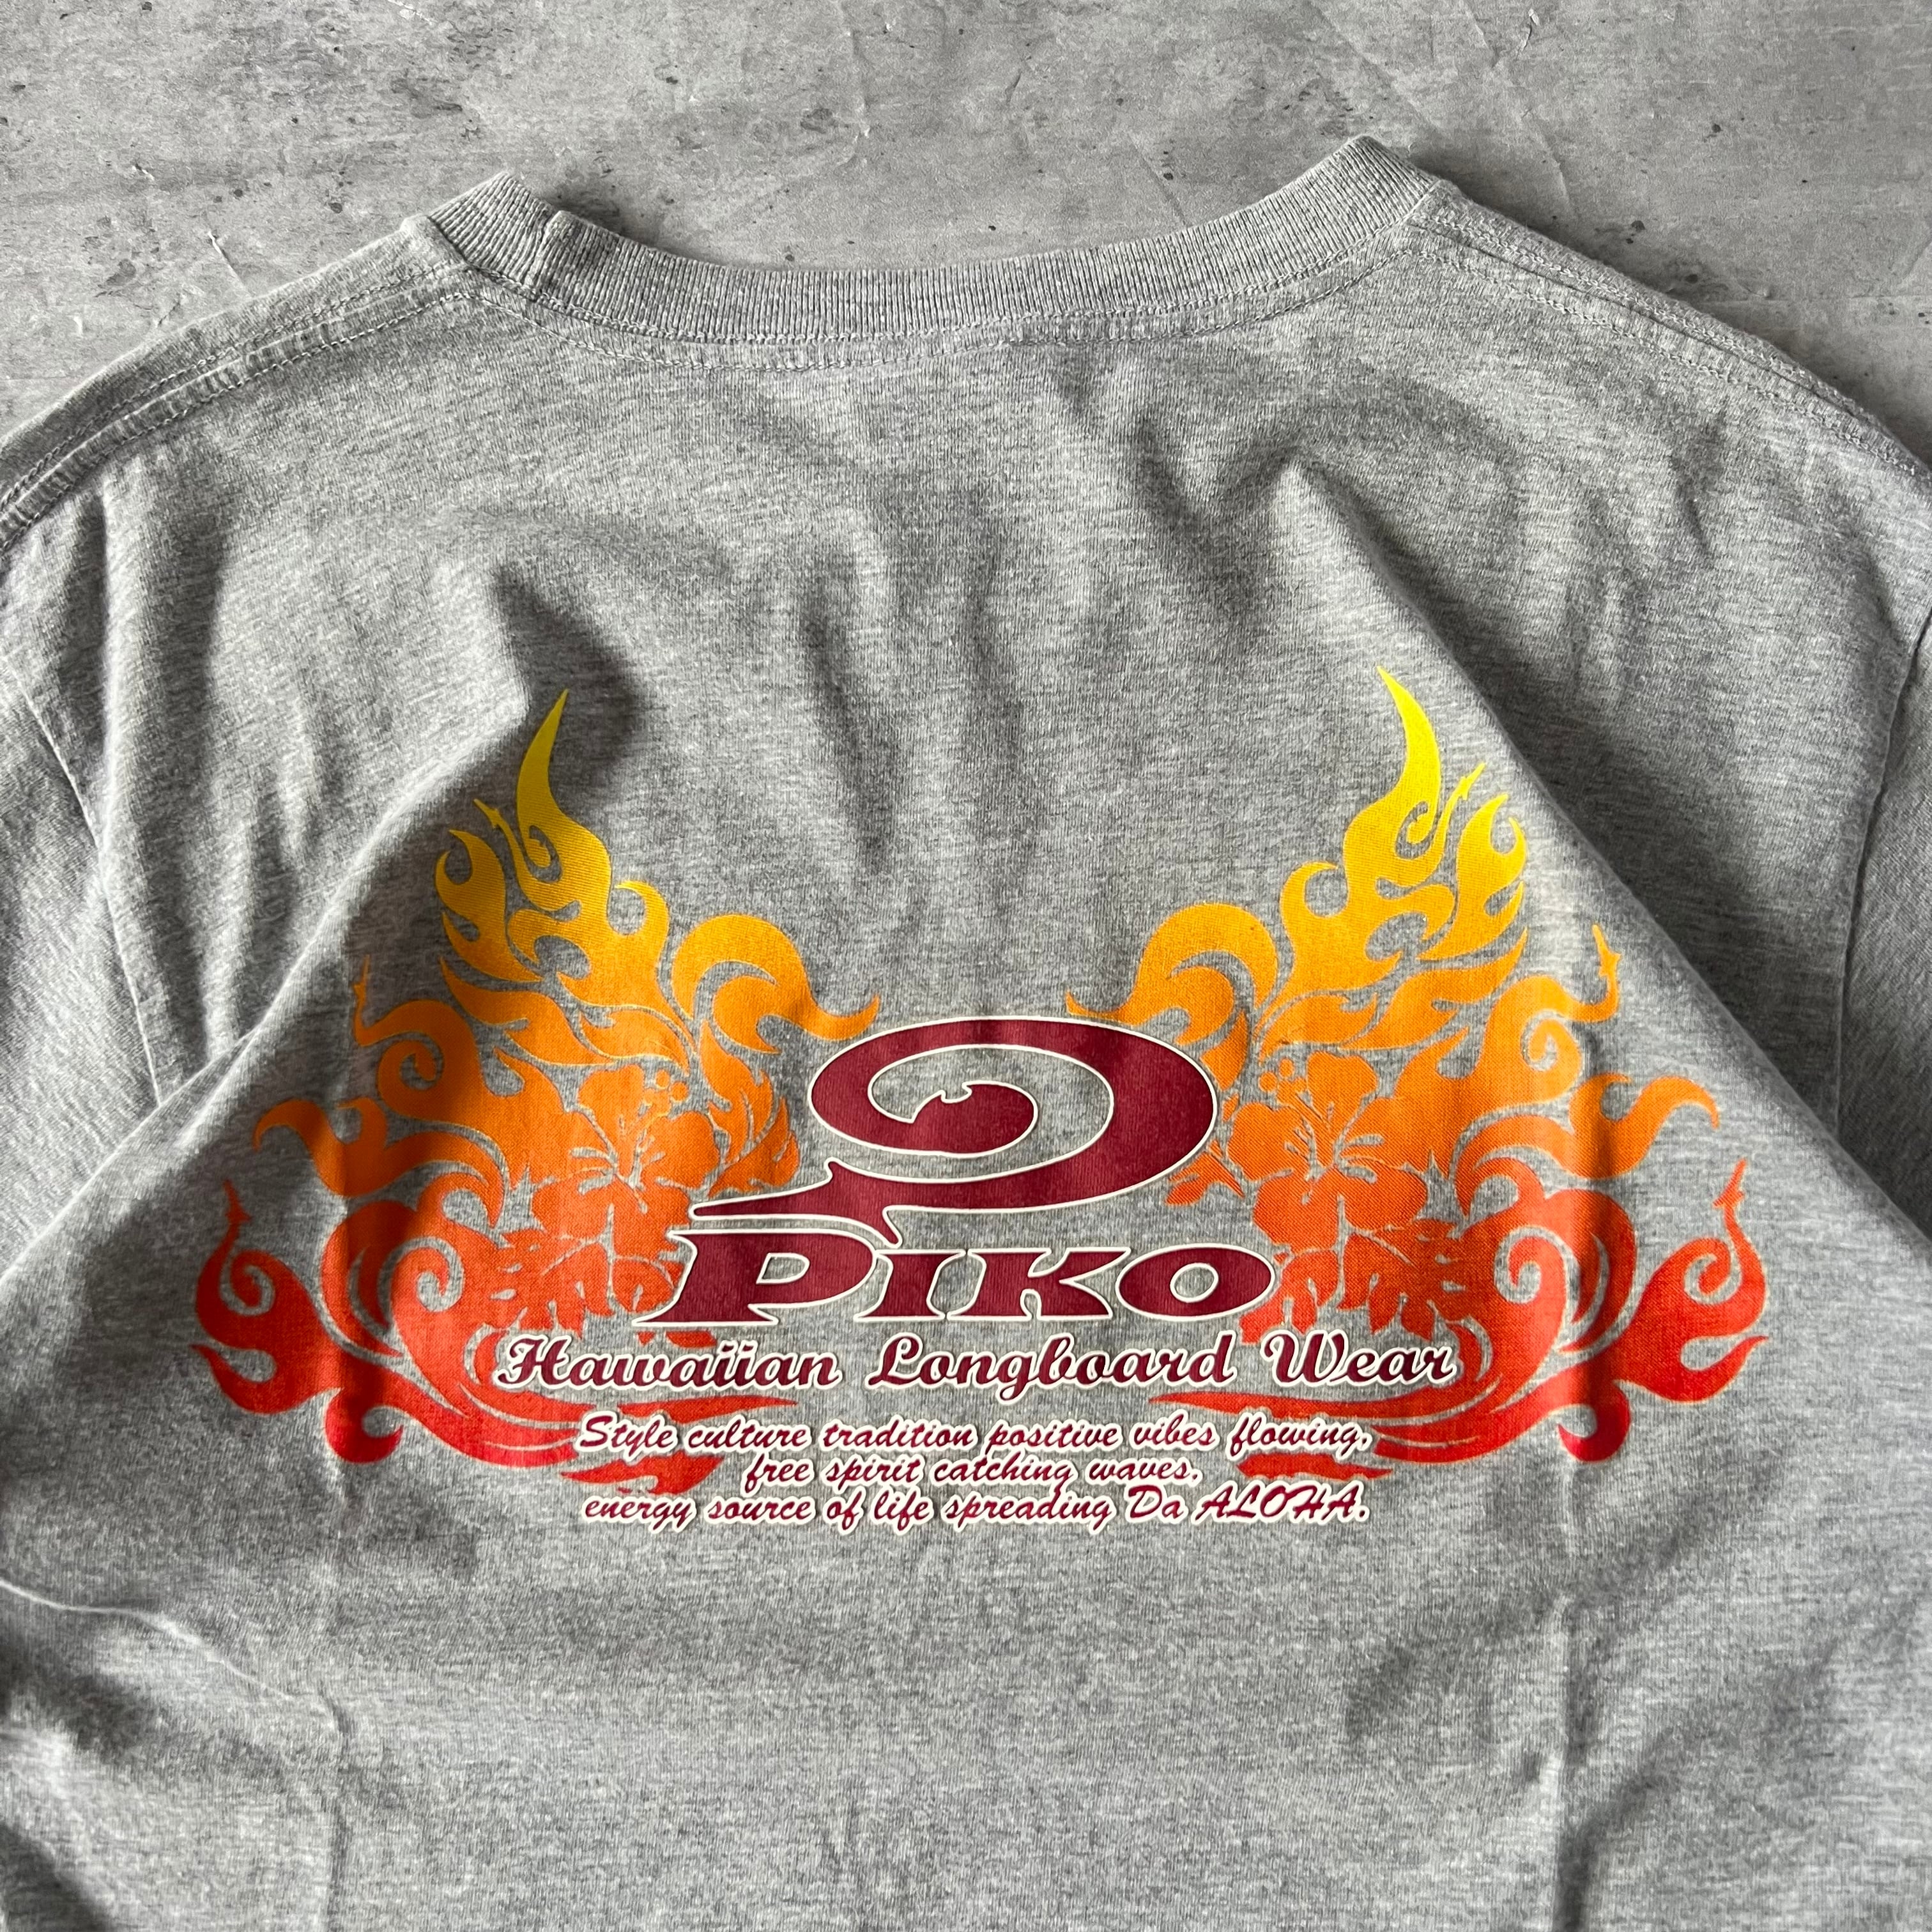 90s〜early00s “PIKO” logo tee single stitch Tee 90年代 ピコ tシャツ